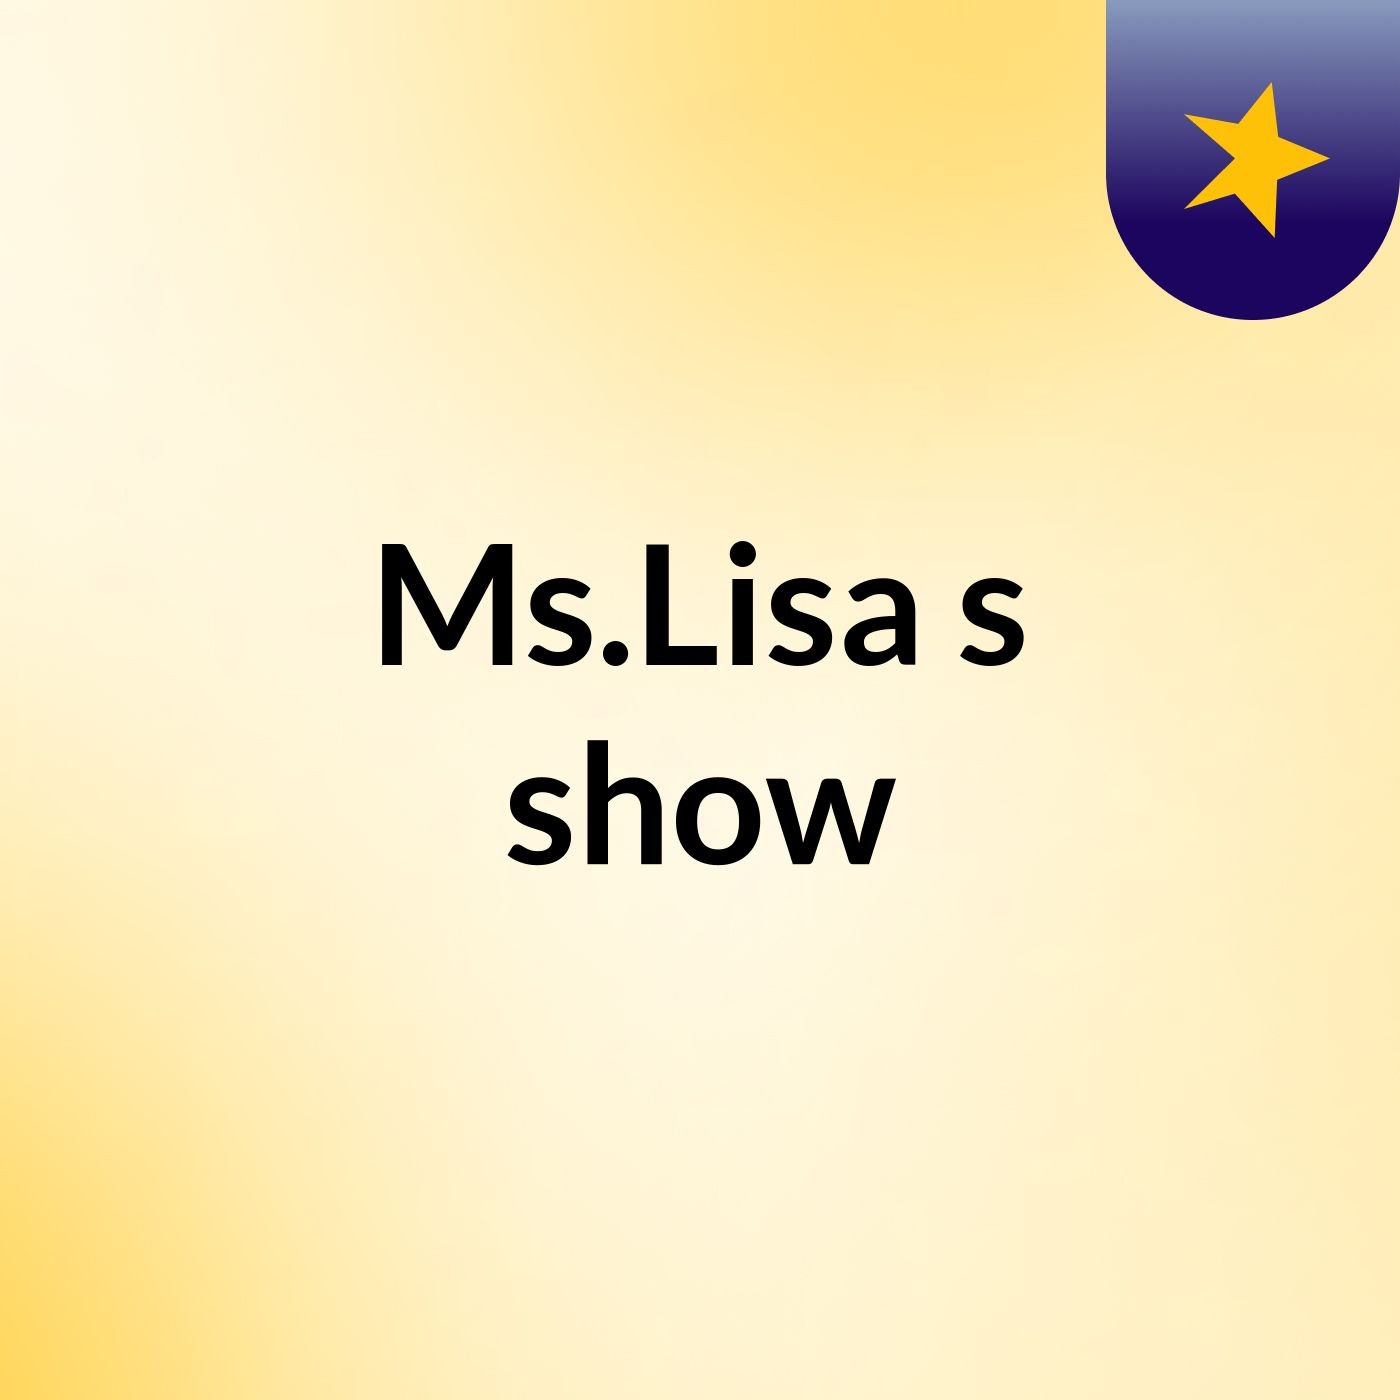 Ms.Lisa's show